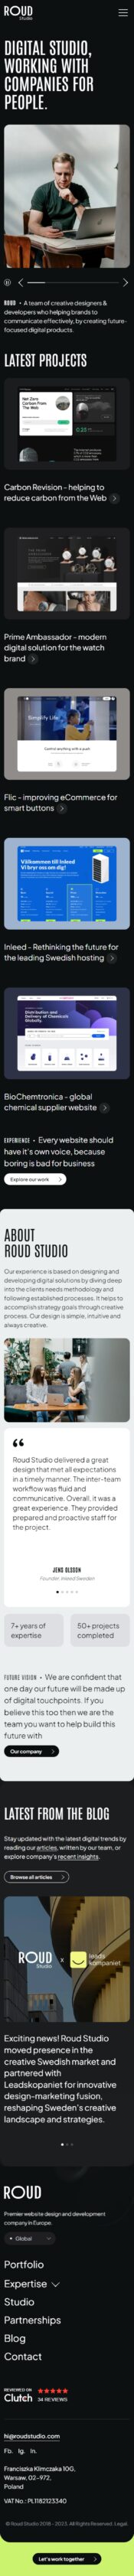 Roud studio design agencies 404 pages